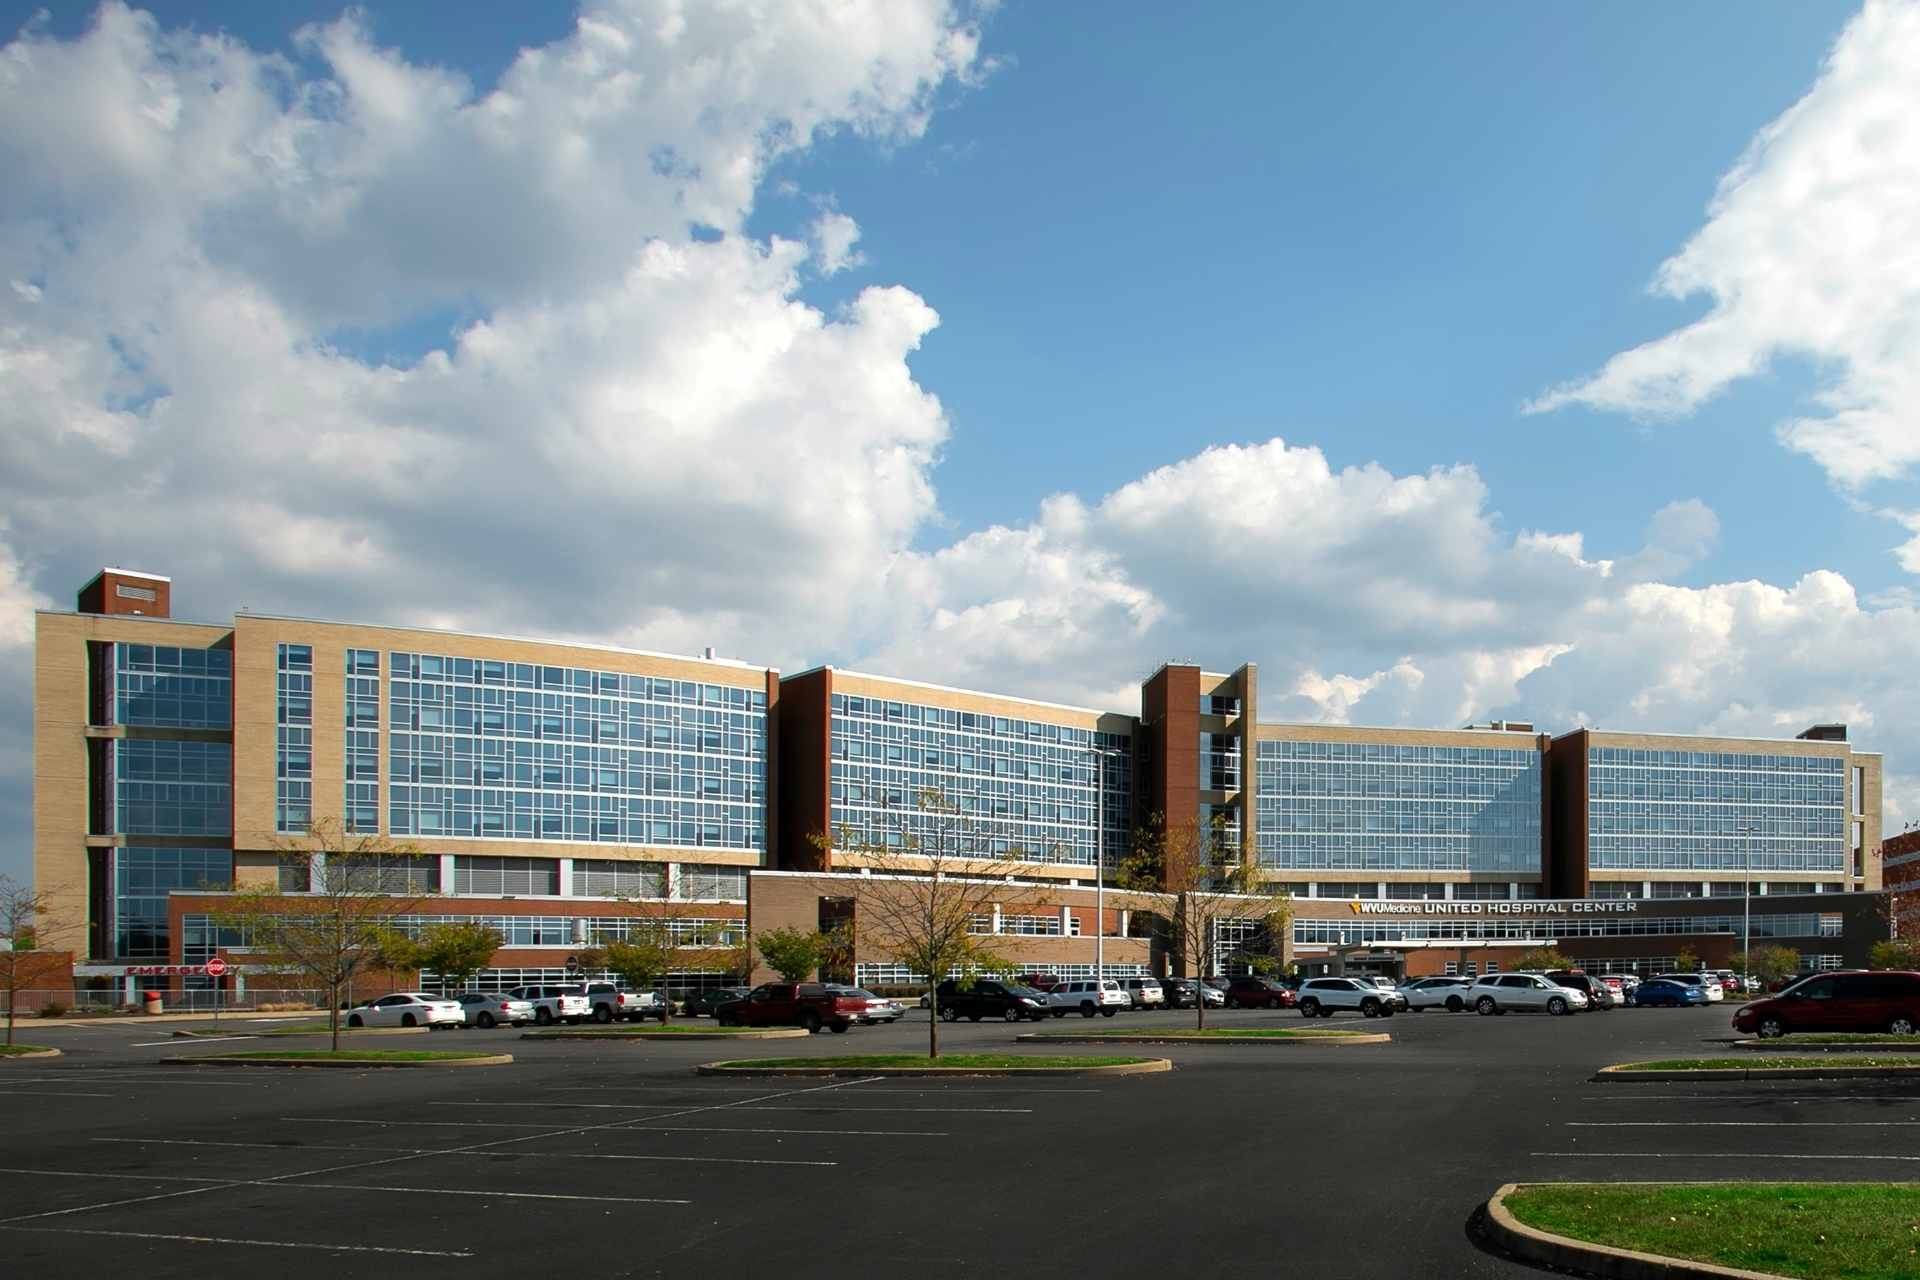 United Hospital Center